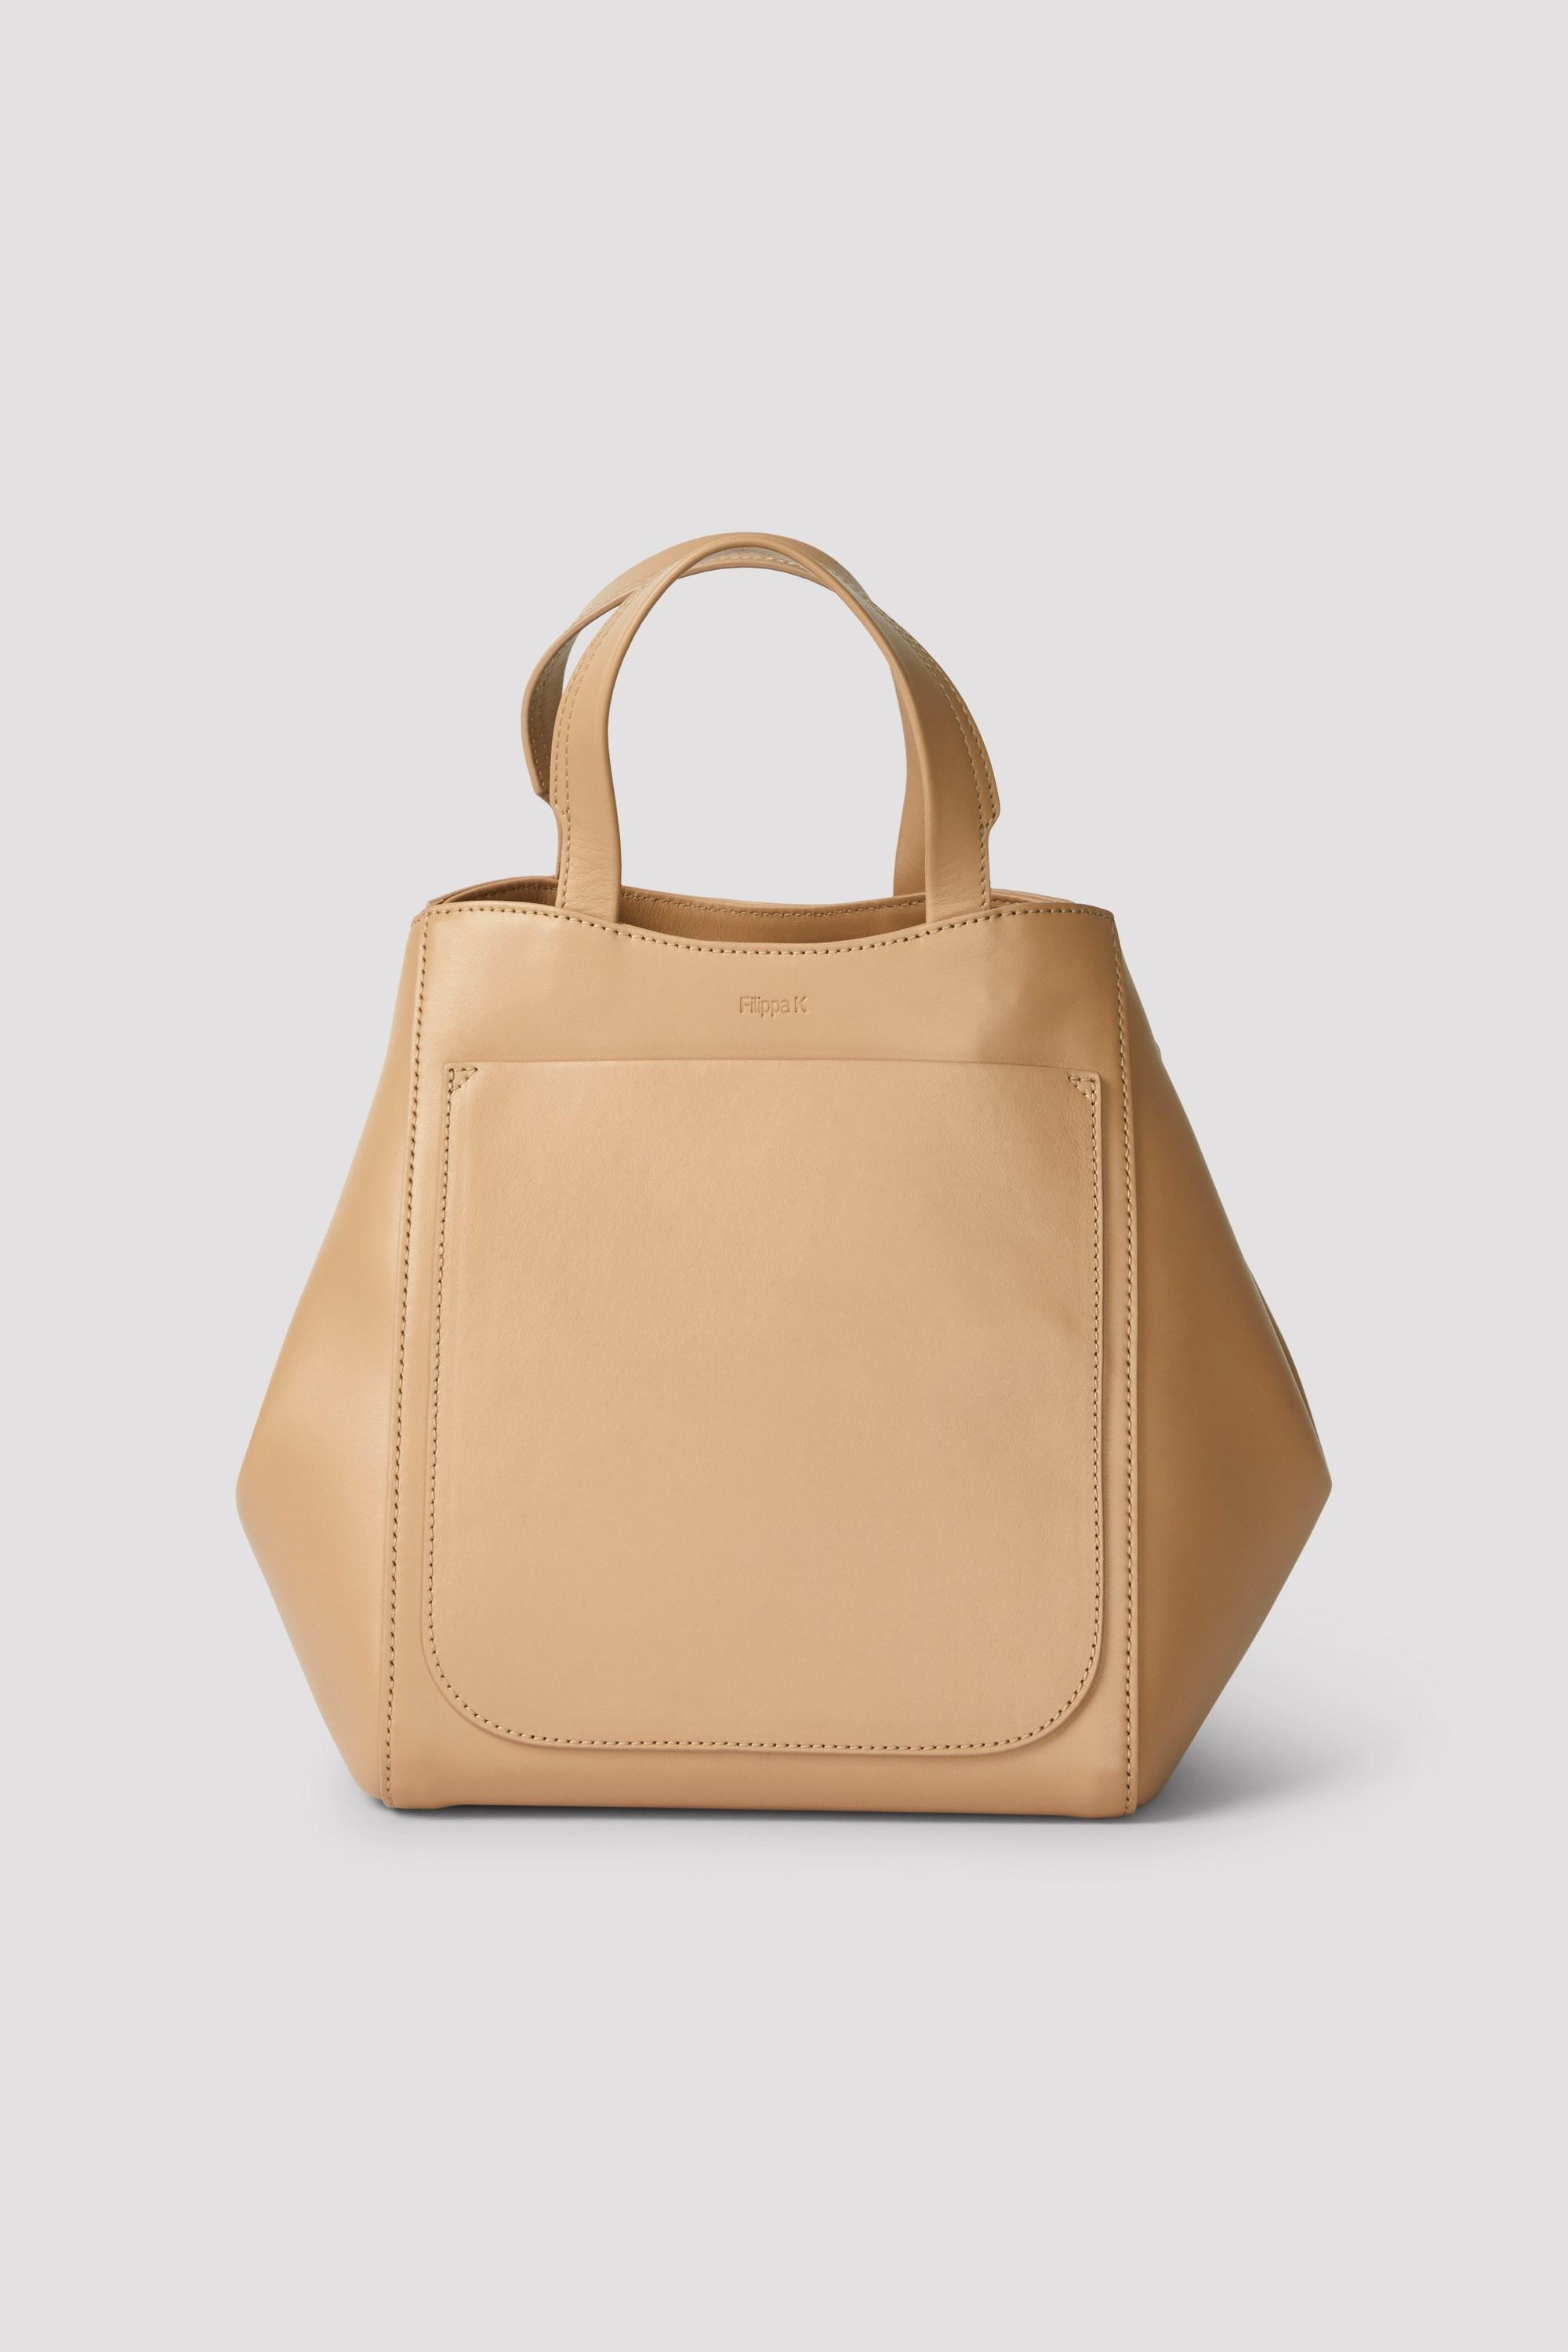 Filippa K Shelby Mini Bucket Leather Bag in Honey Beige (Natural) - Lyst